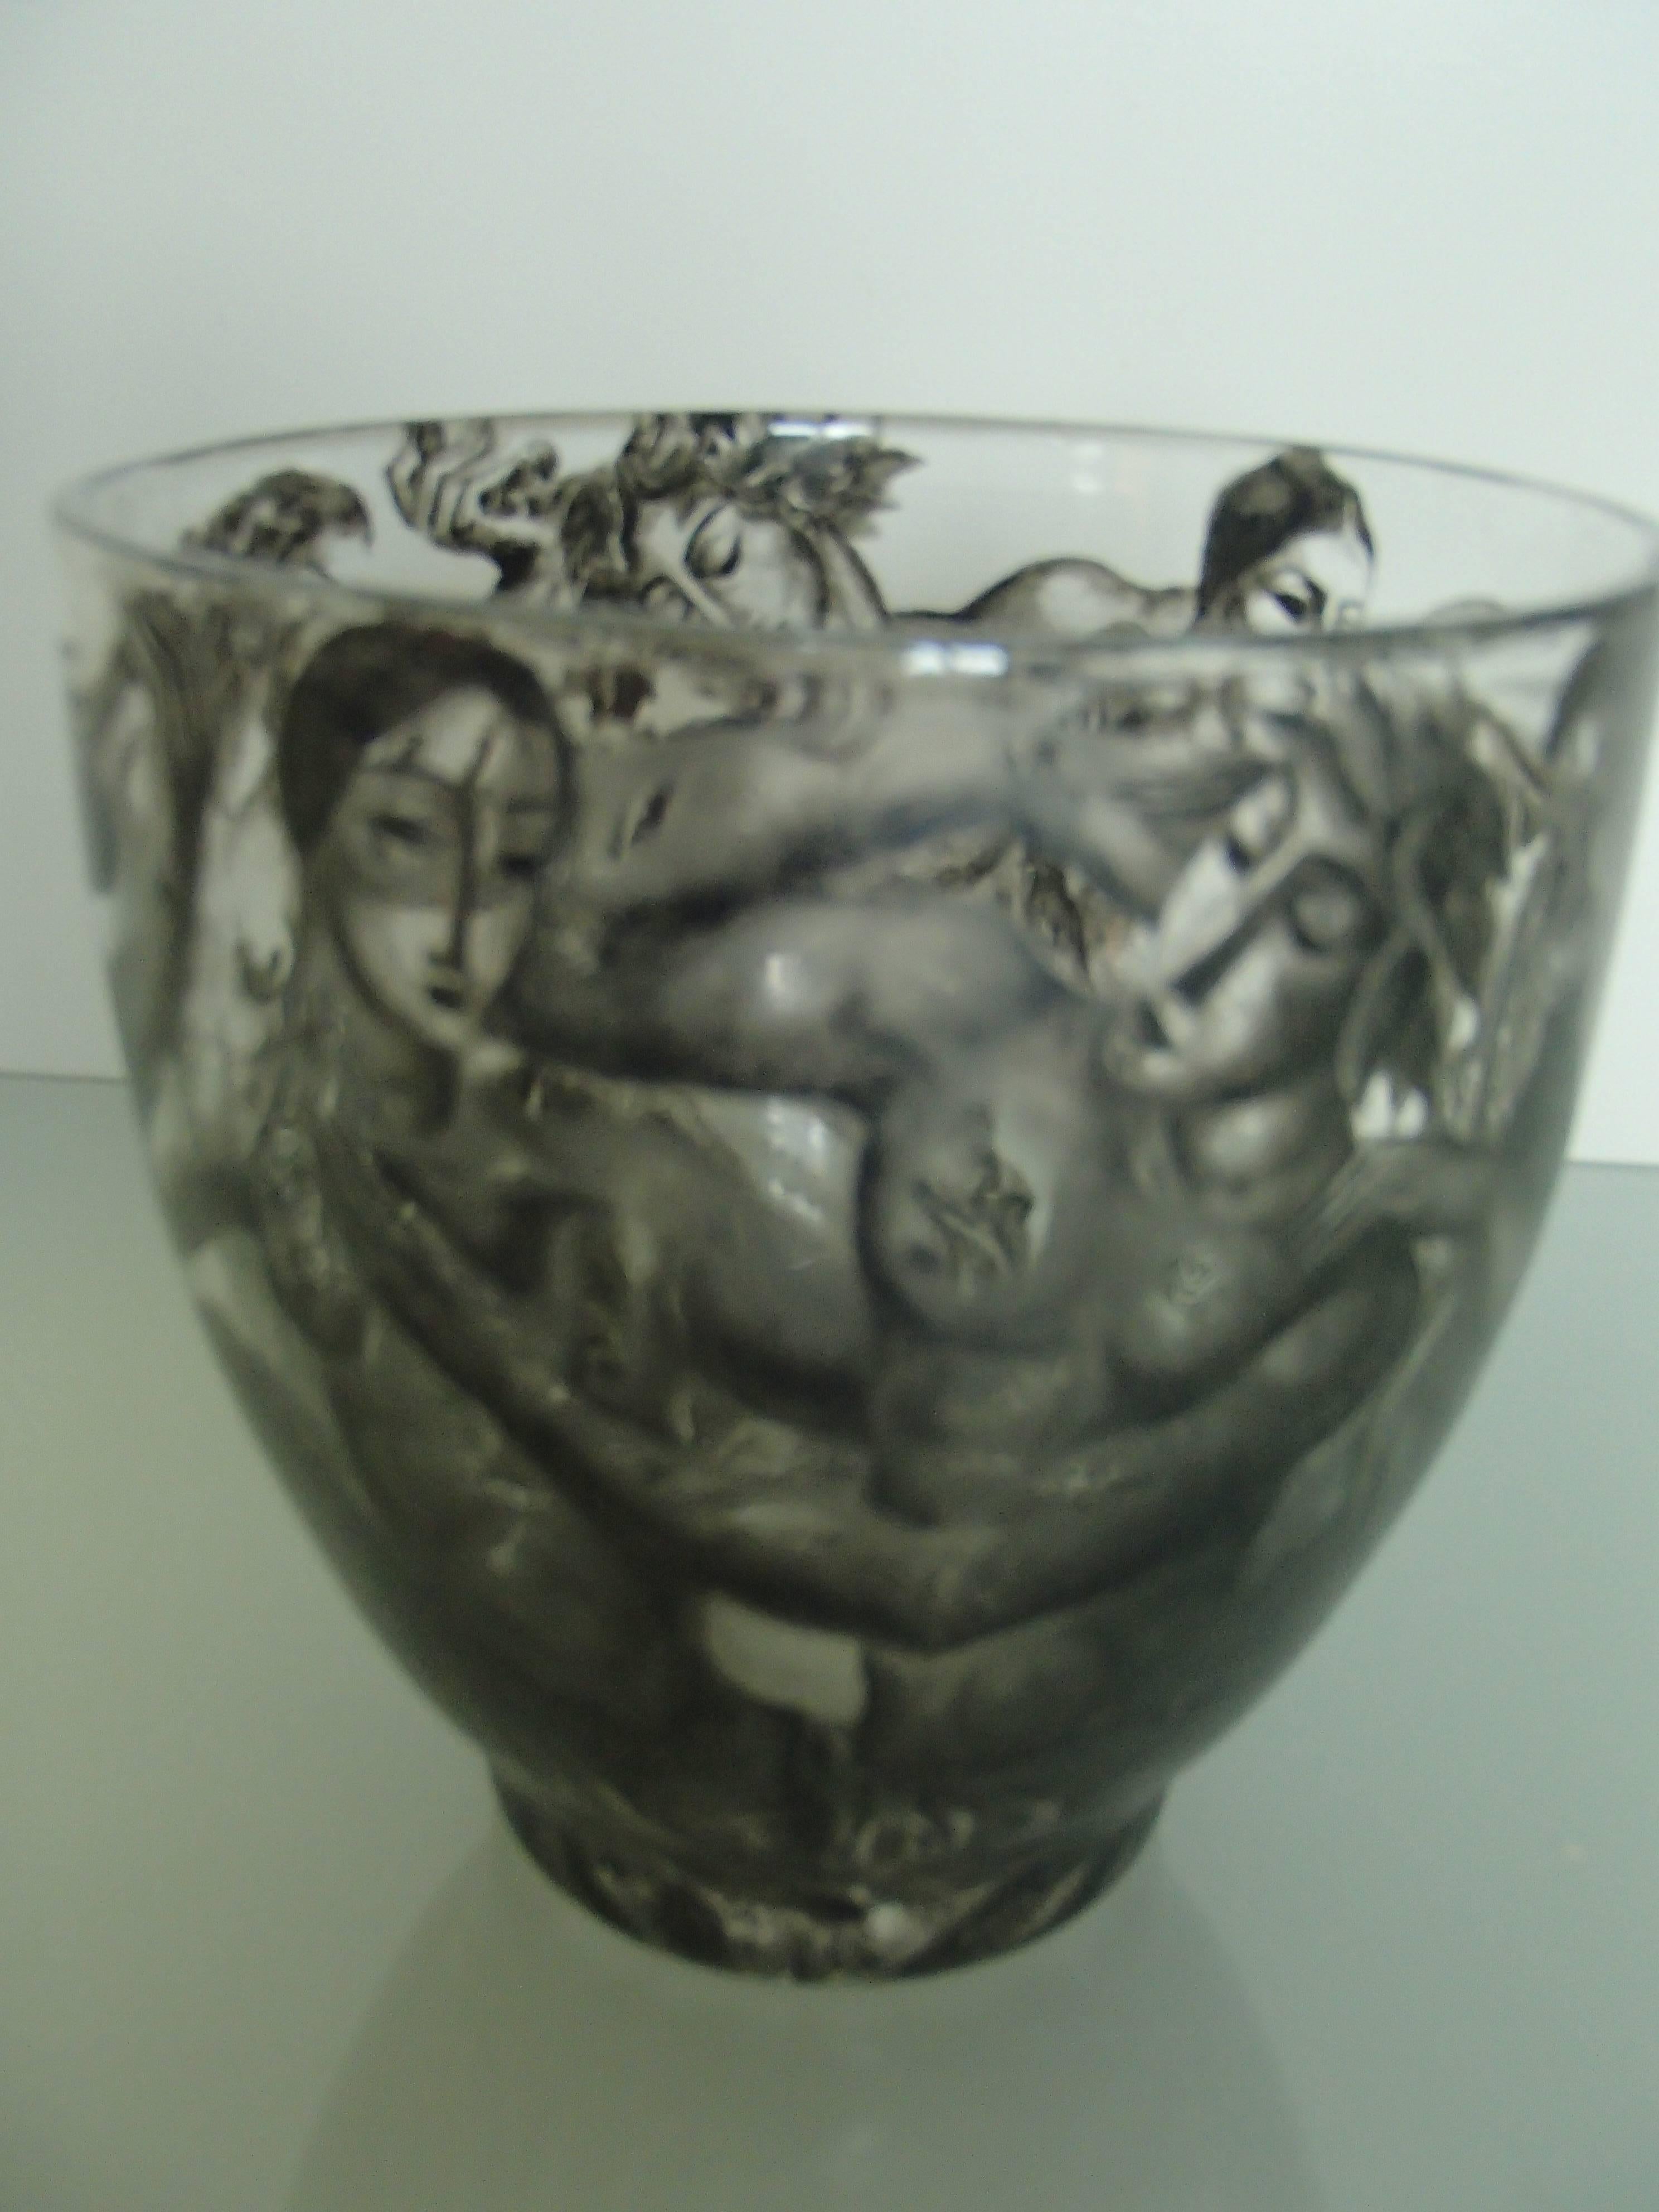 Bauhaus bowl with black cubistic greac romain figures  3